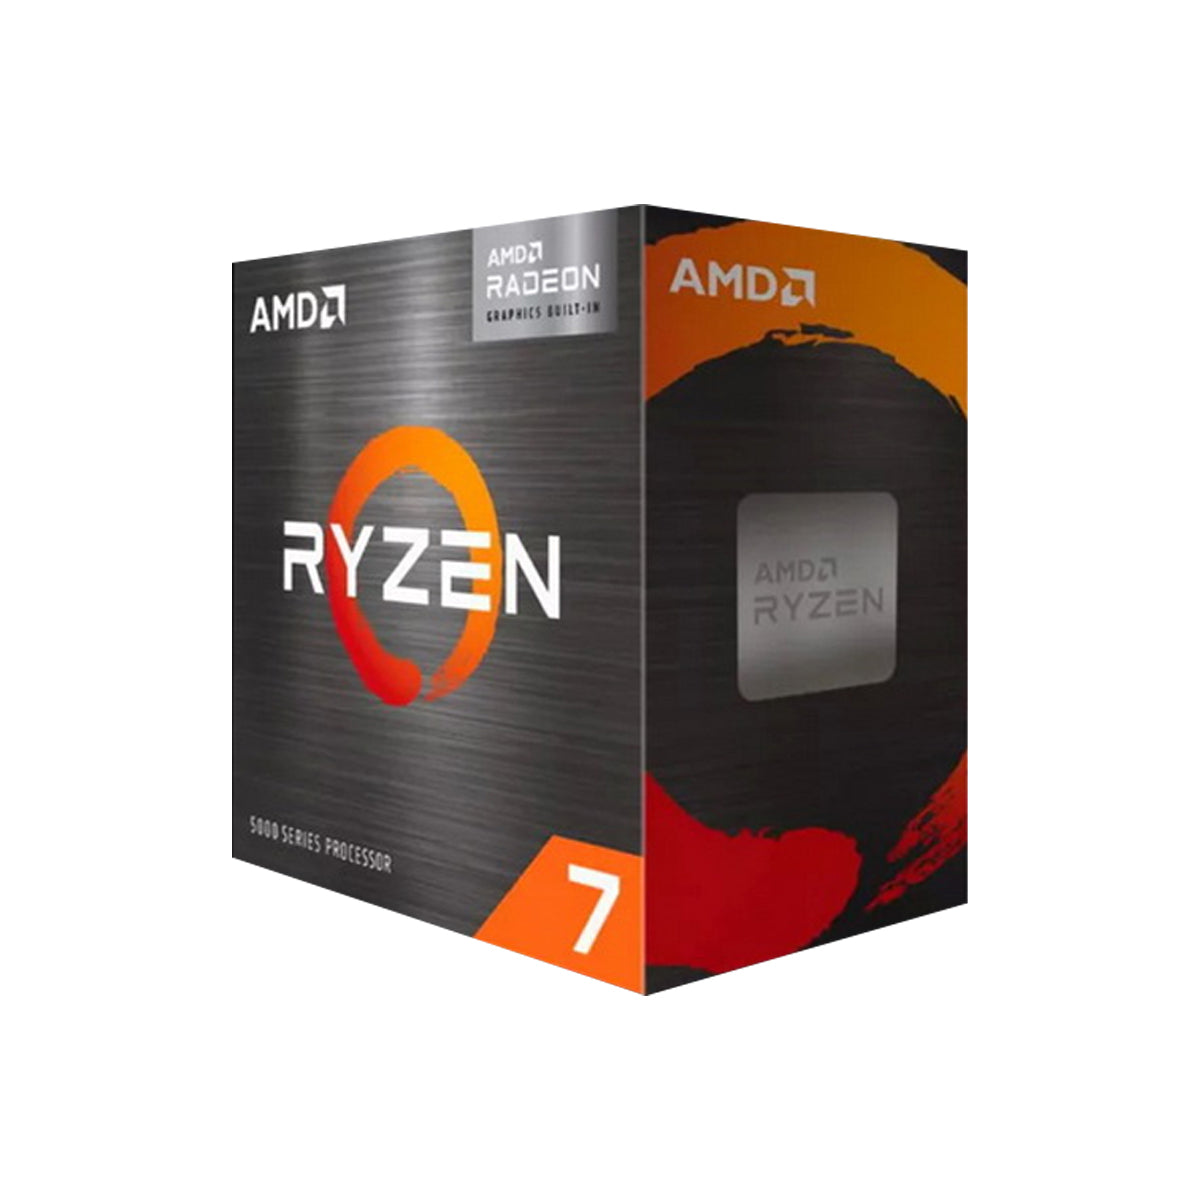 AMD Ryzen 7 5700G डेस्कटॉप प्रोसेसर 8 कोर 4.6GHz तक 20MB कैश AM4 सॉकेट Radeon ग्राफ़िक्स के साथ